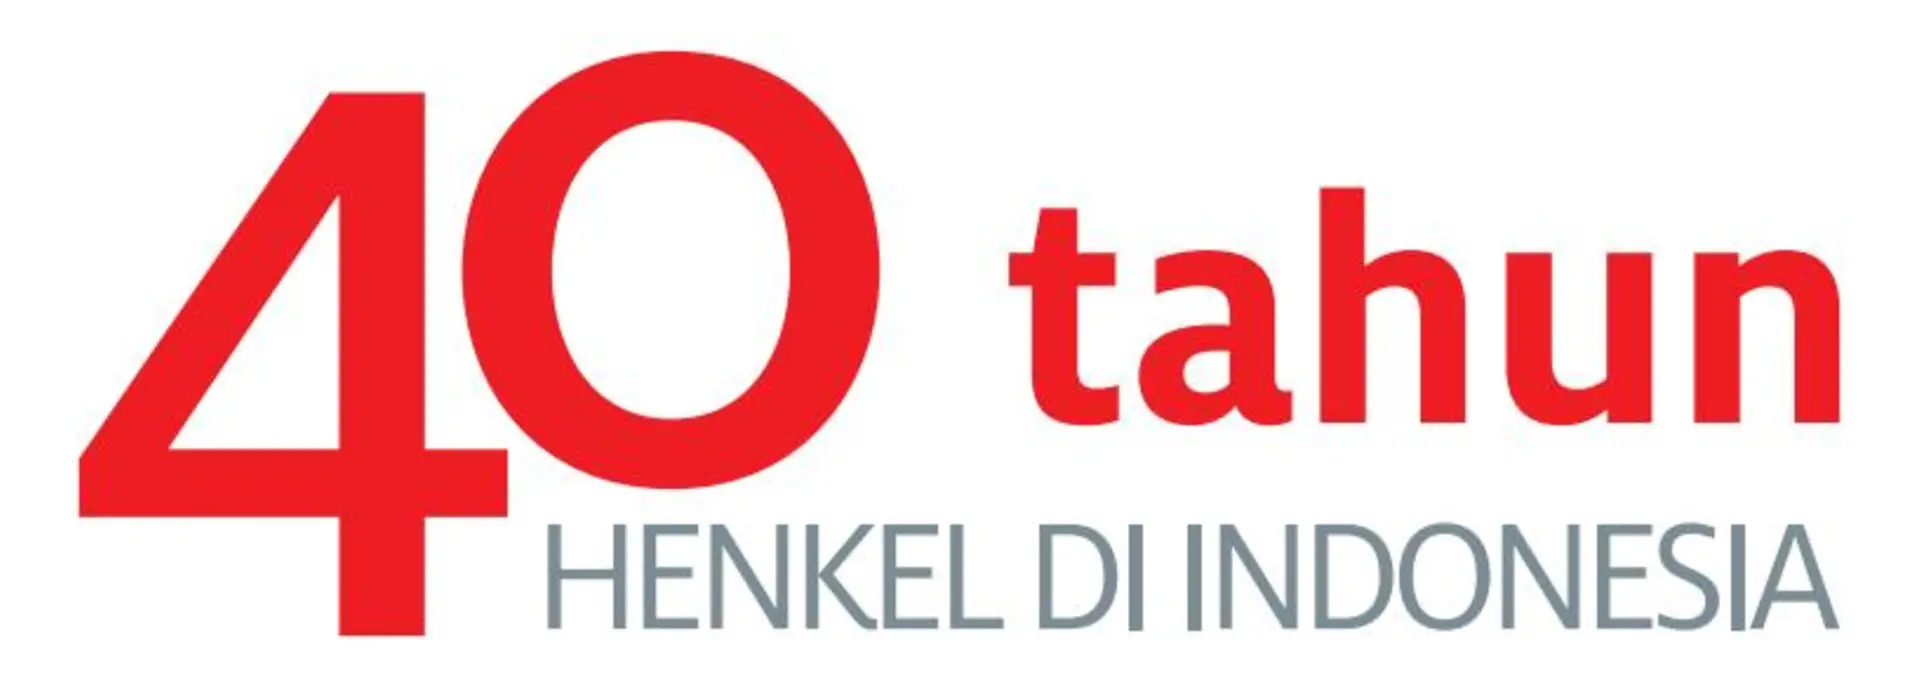 
Henkel celebrates 40 years in Indonesia